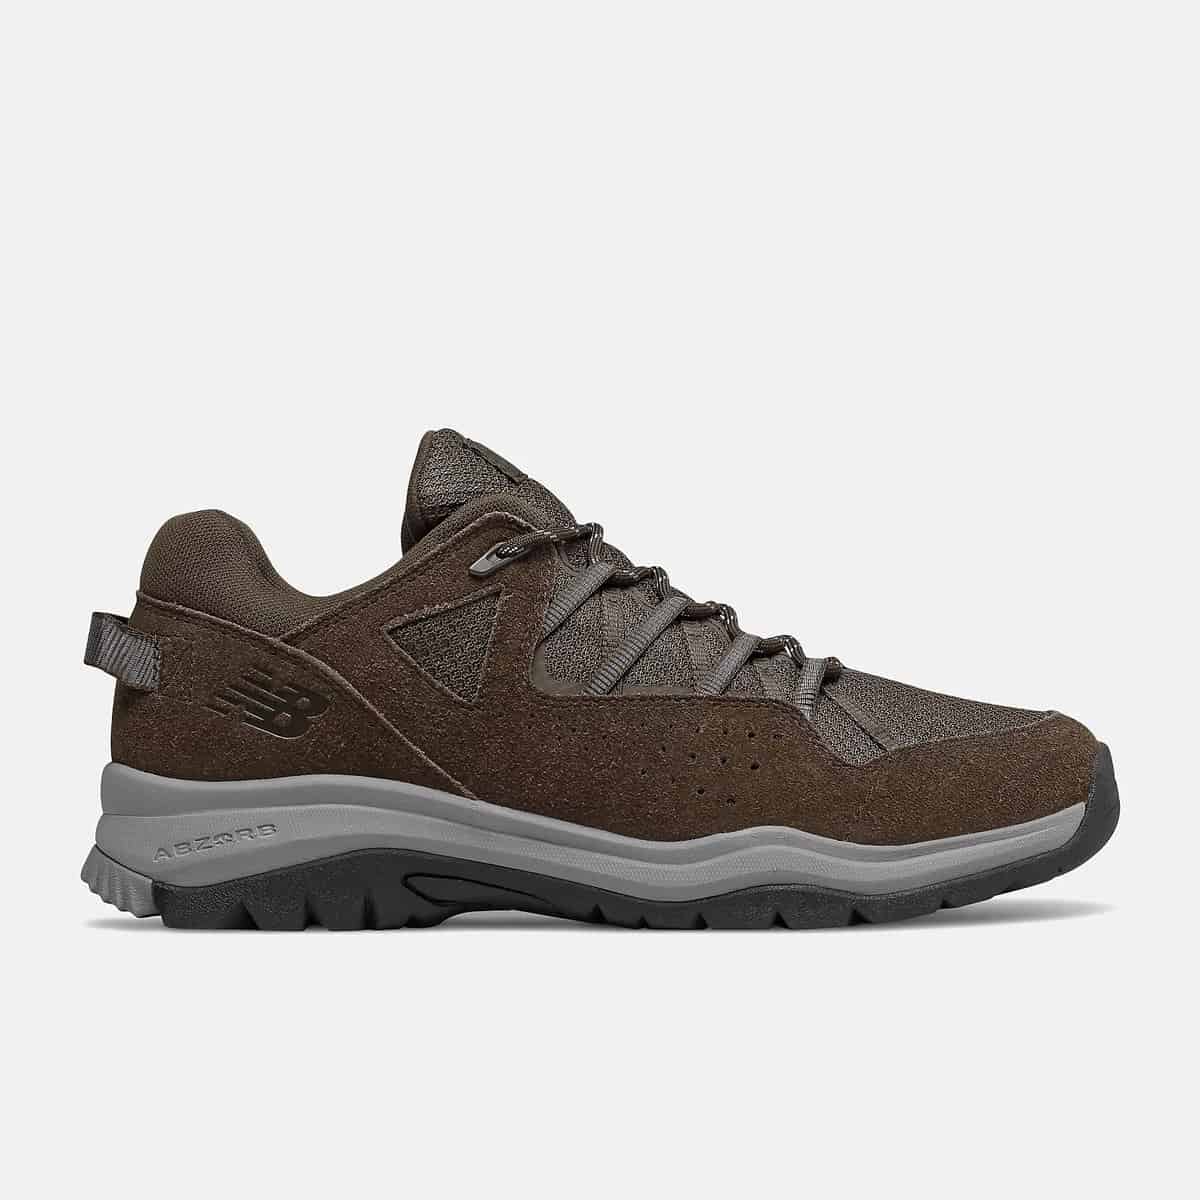 New Balance 669 v2 Trail Walking Men’s Shoes